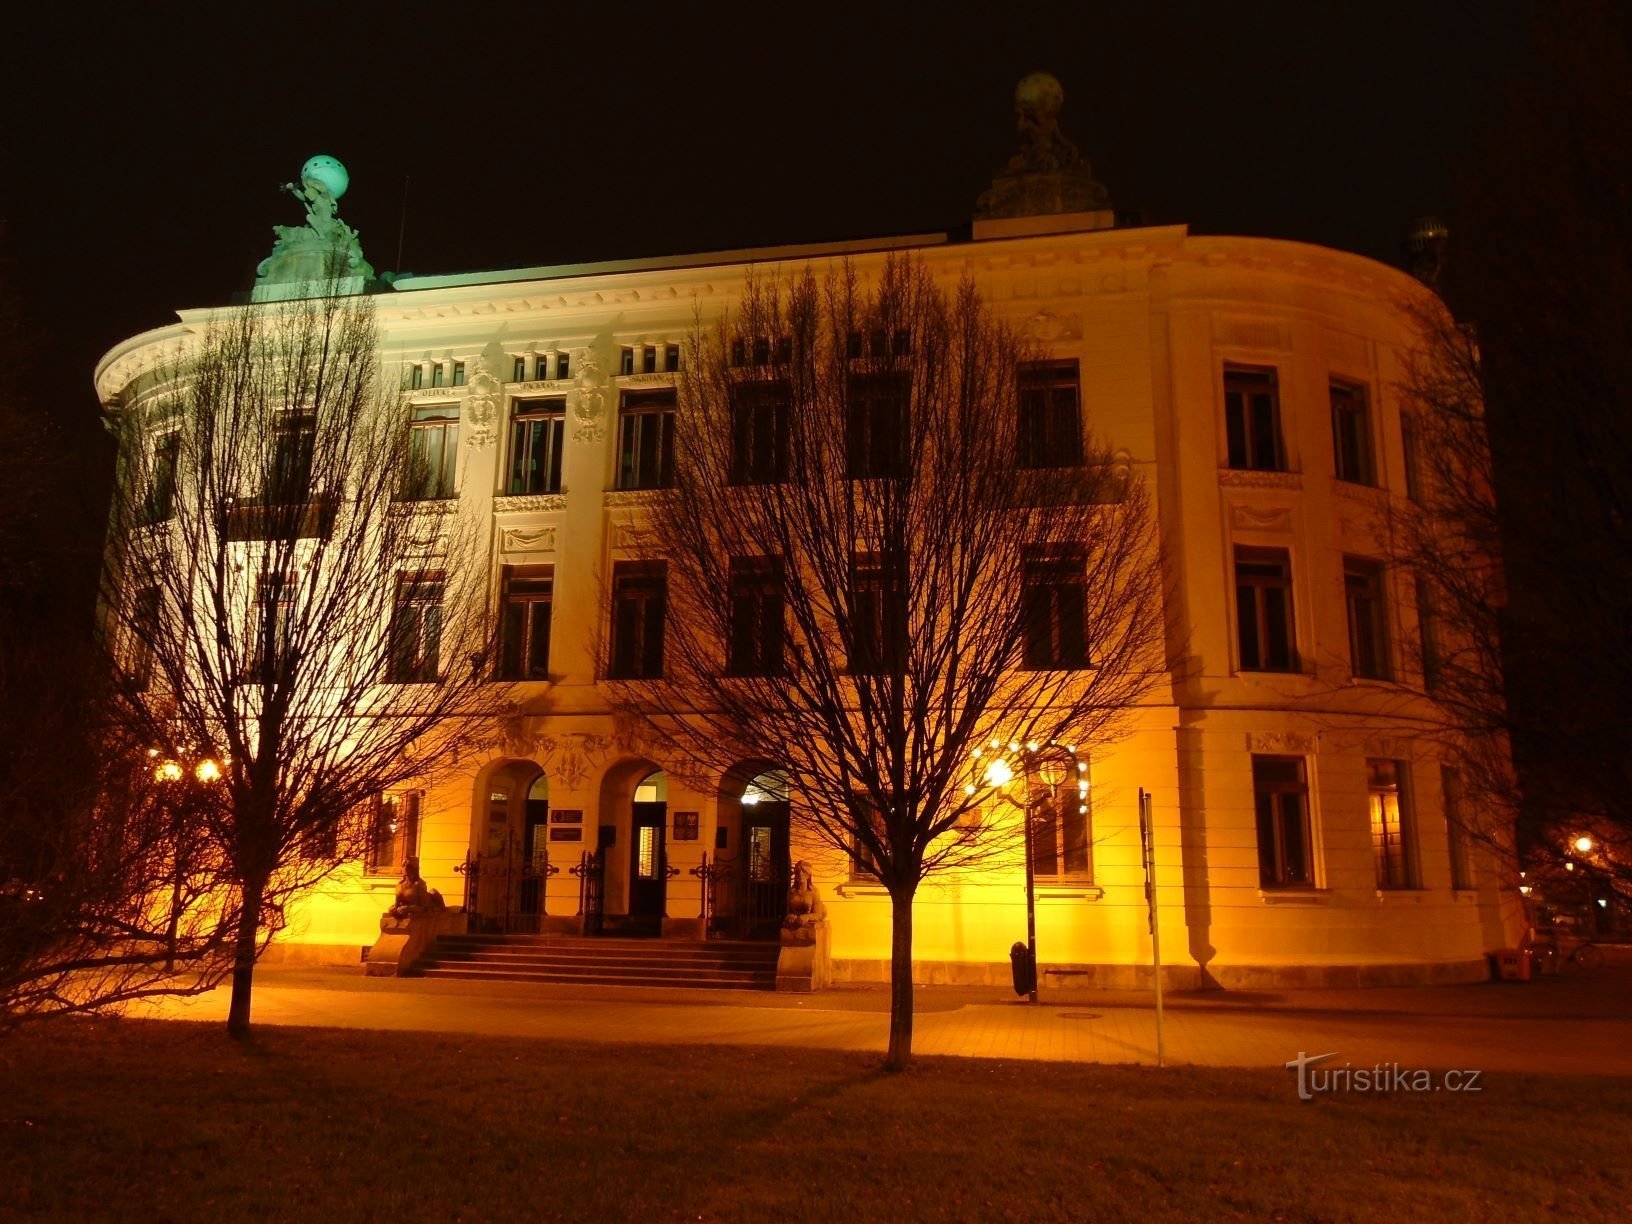 Edificio de la antigua academia de negocios (Hradec Králové, 3.12.2017 de diciembre de XNUMX)